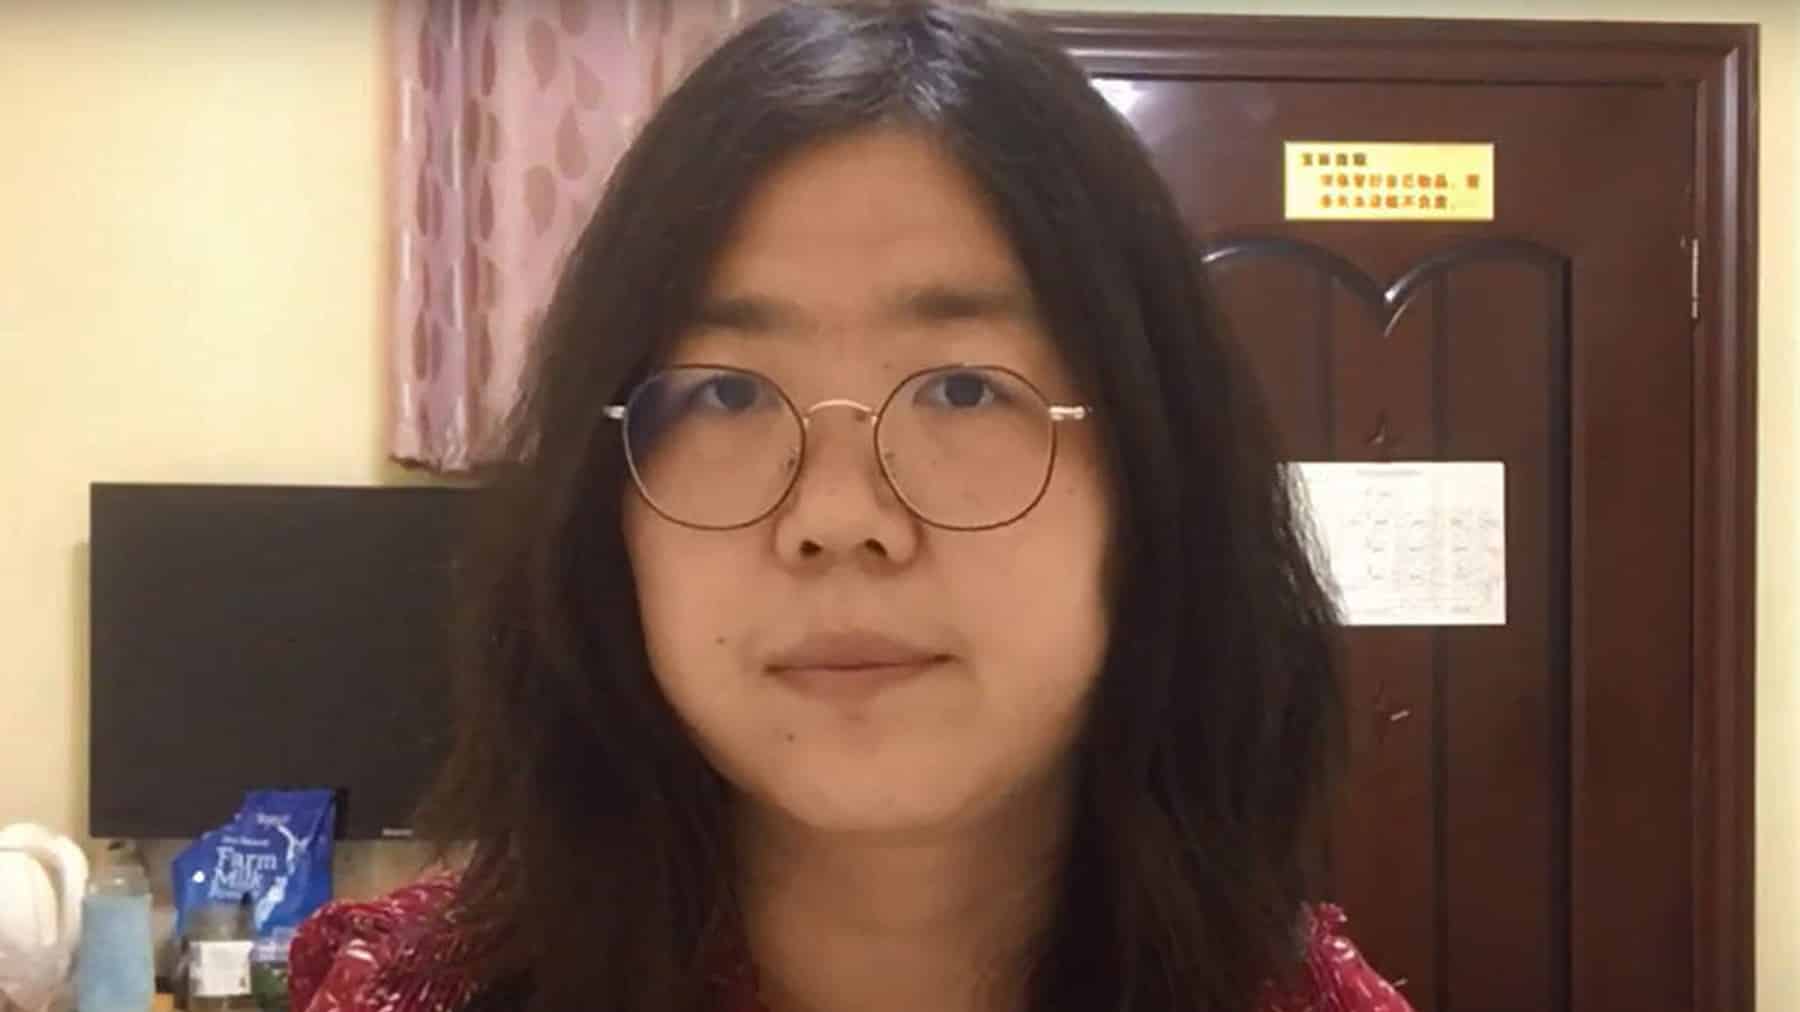 La ONU teme por la vida de la periodista china Zhang Zhan, detenida tras informar del inicio de la pandemia